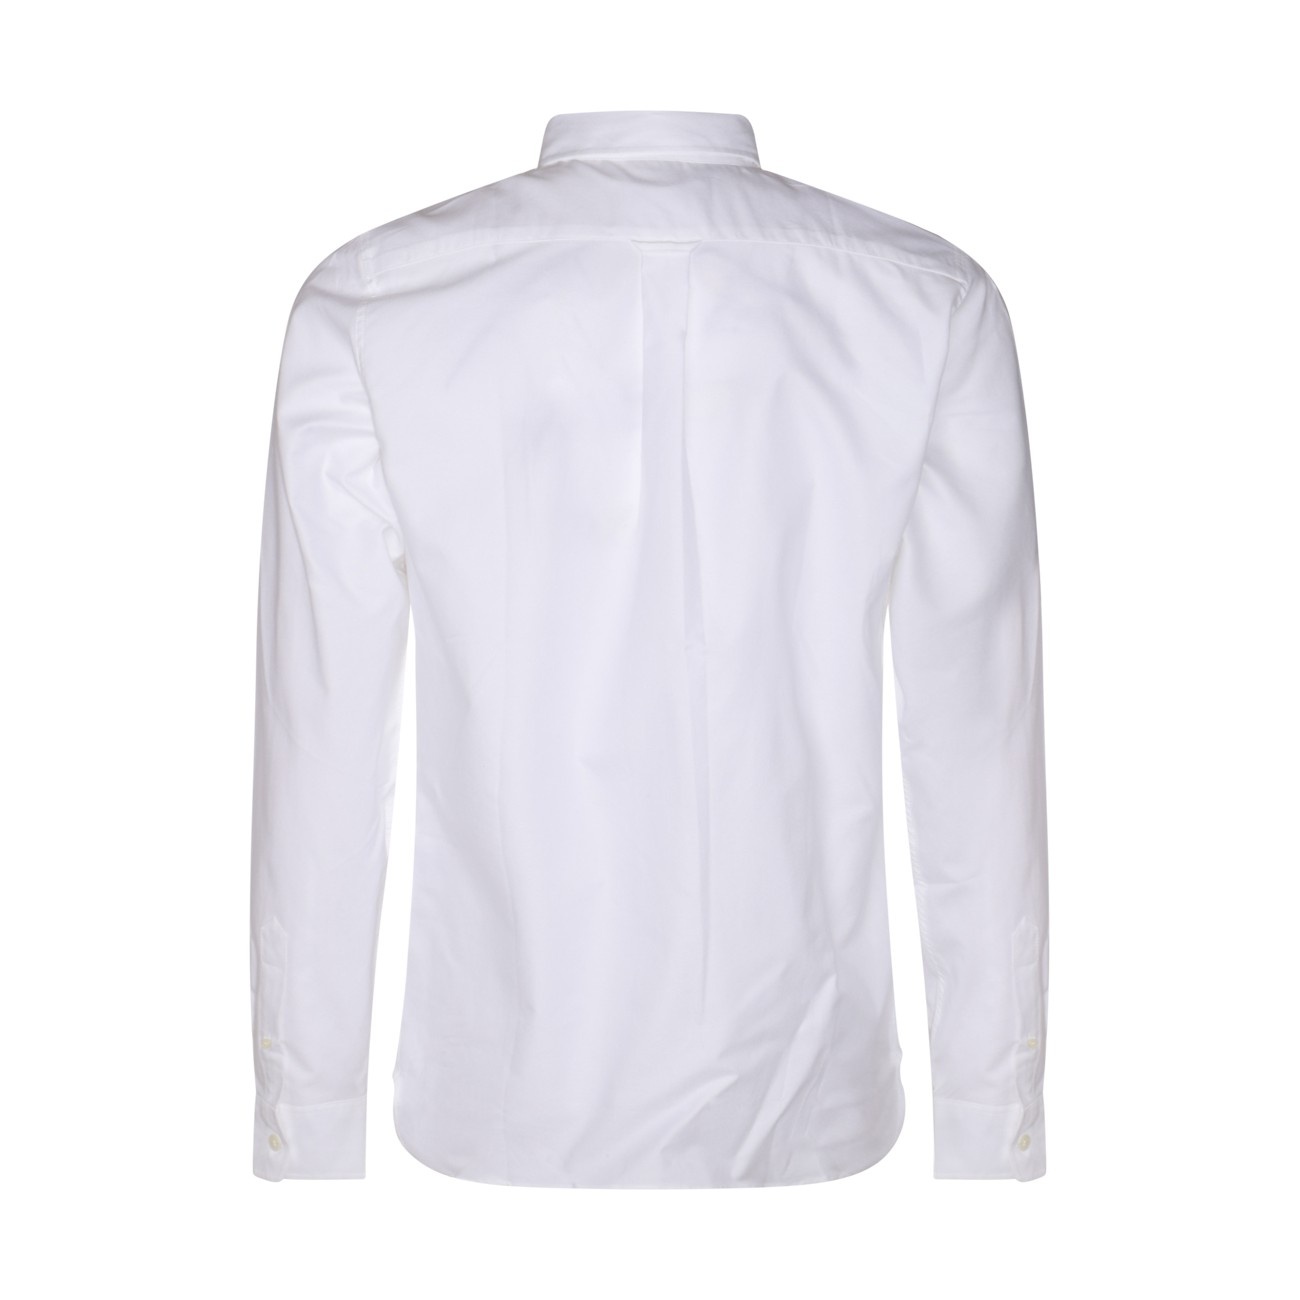 white cotton shirt - 2